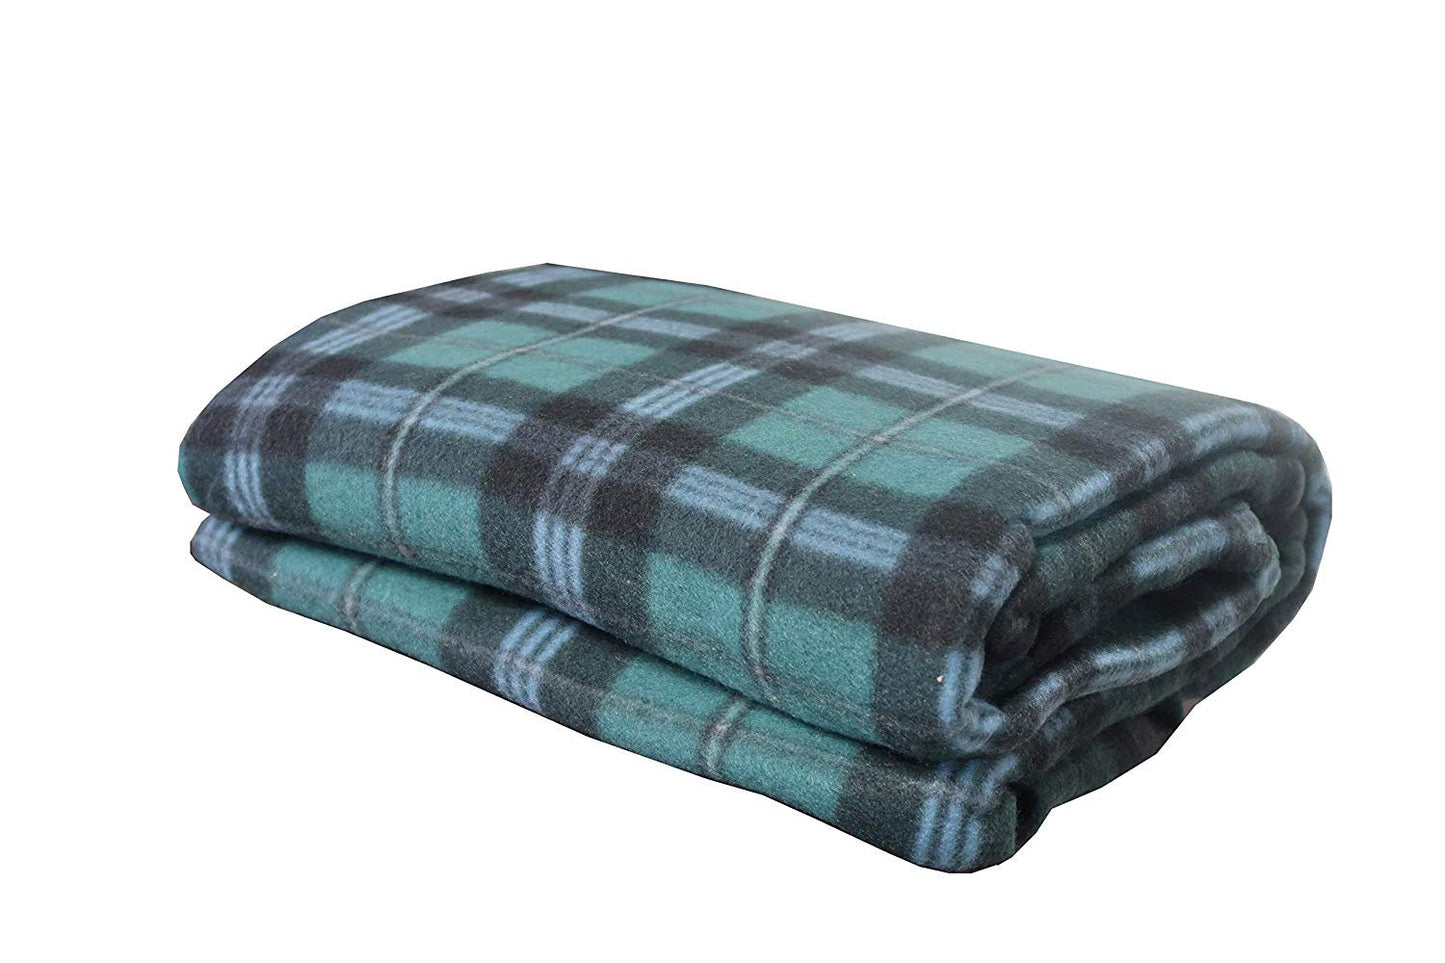 Multi Use Fleece Blanket (Green)